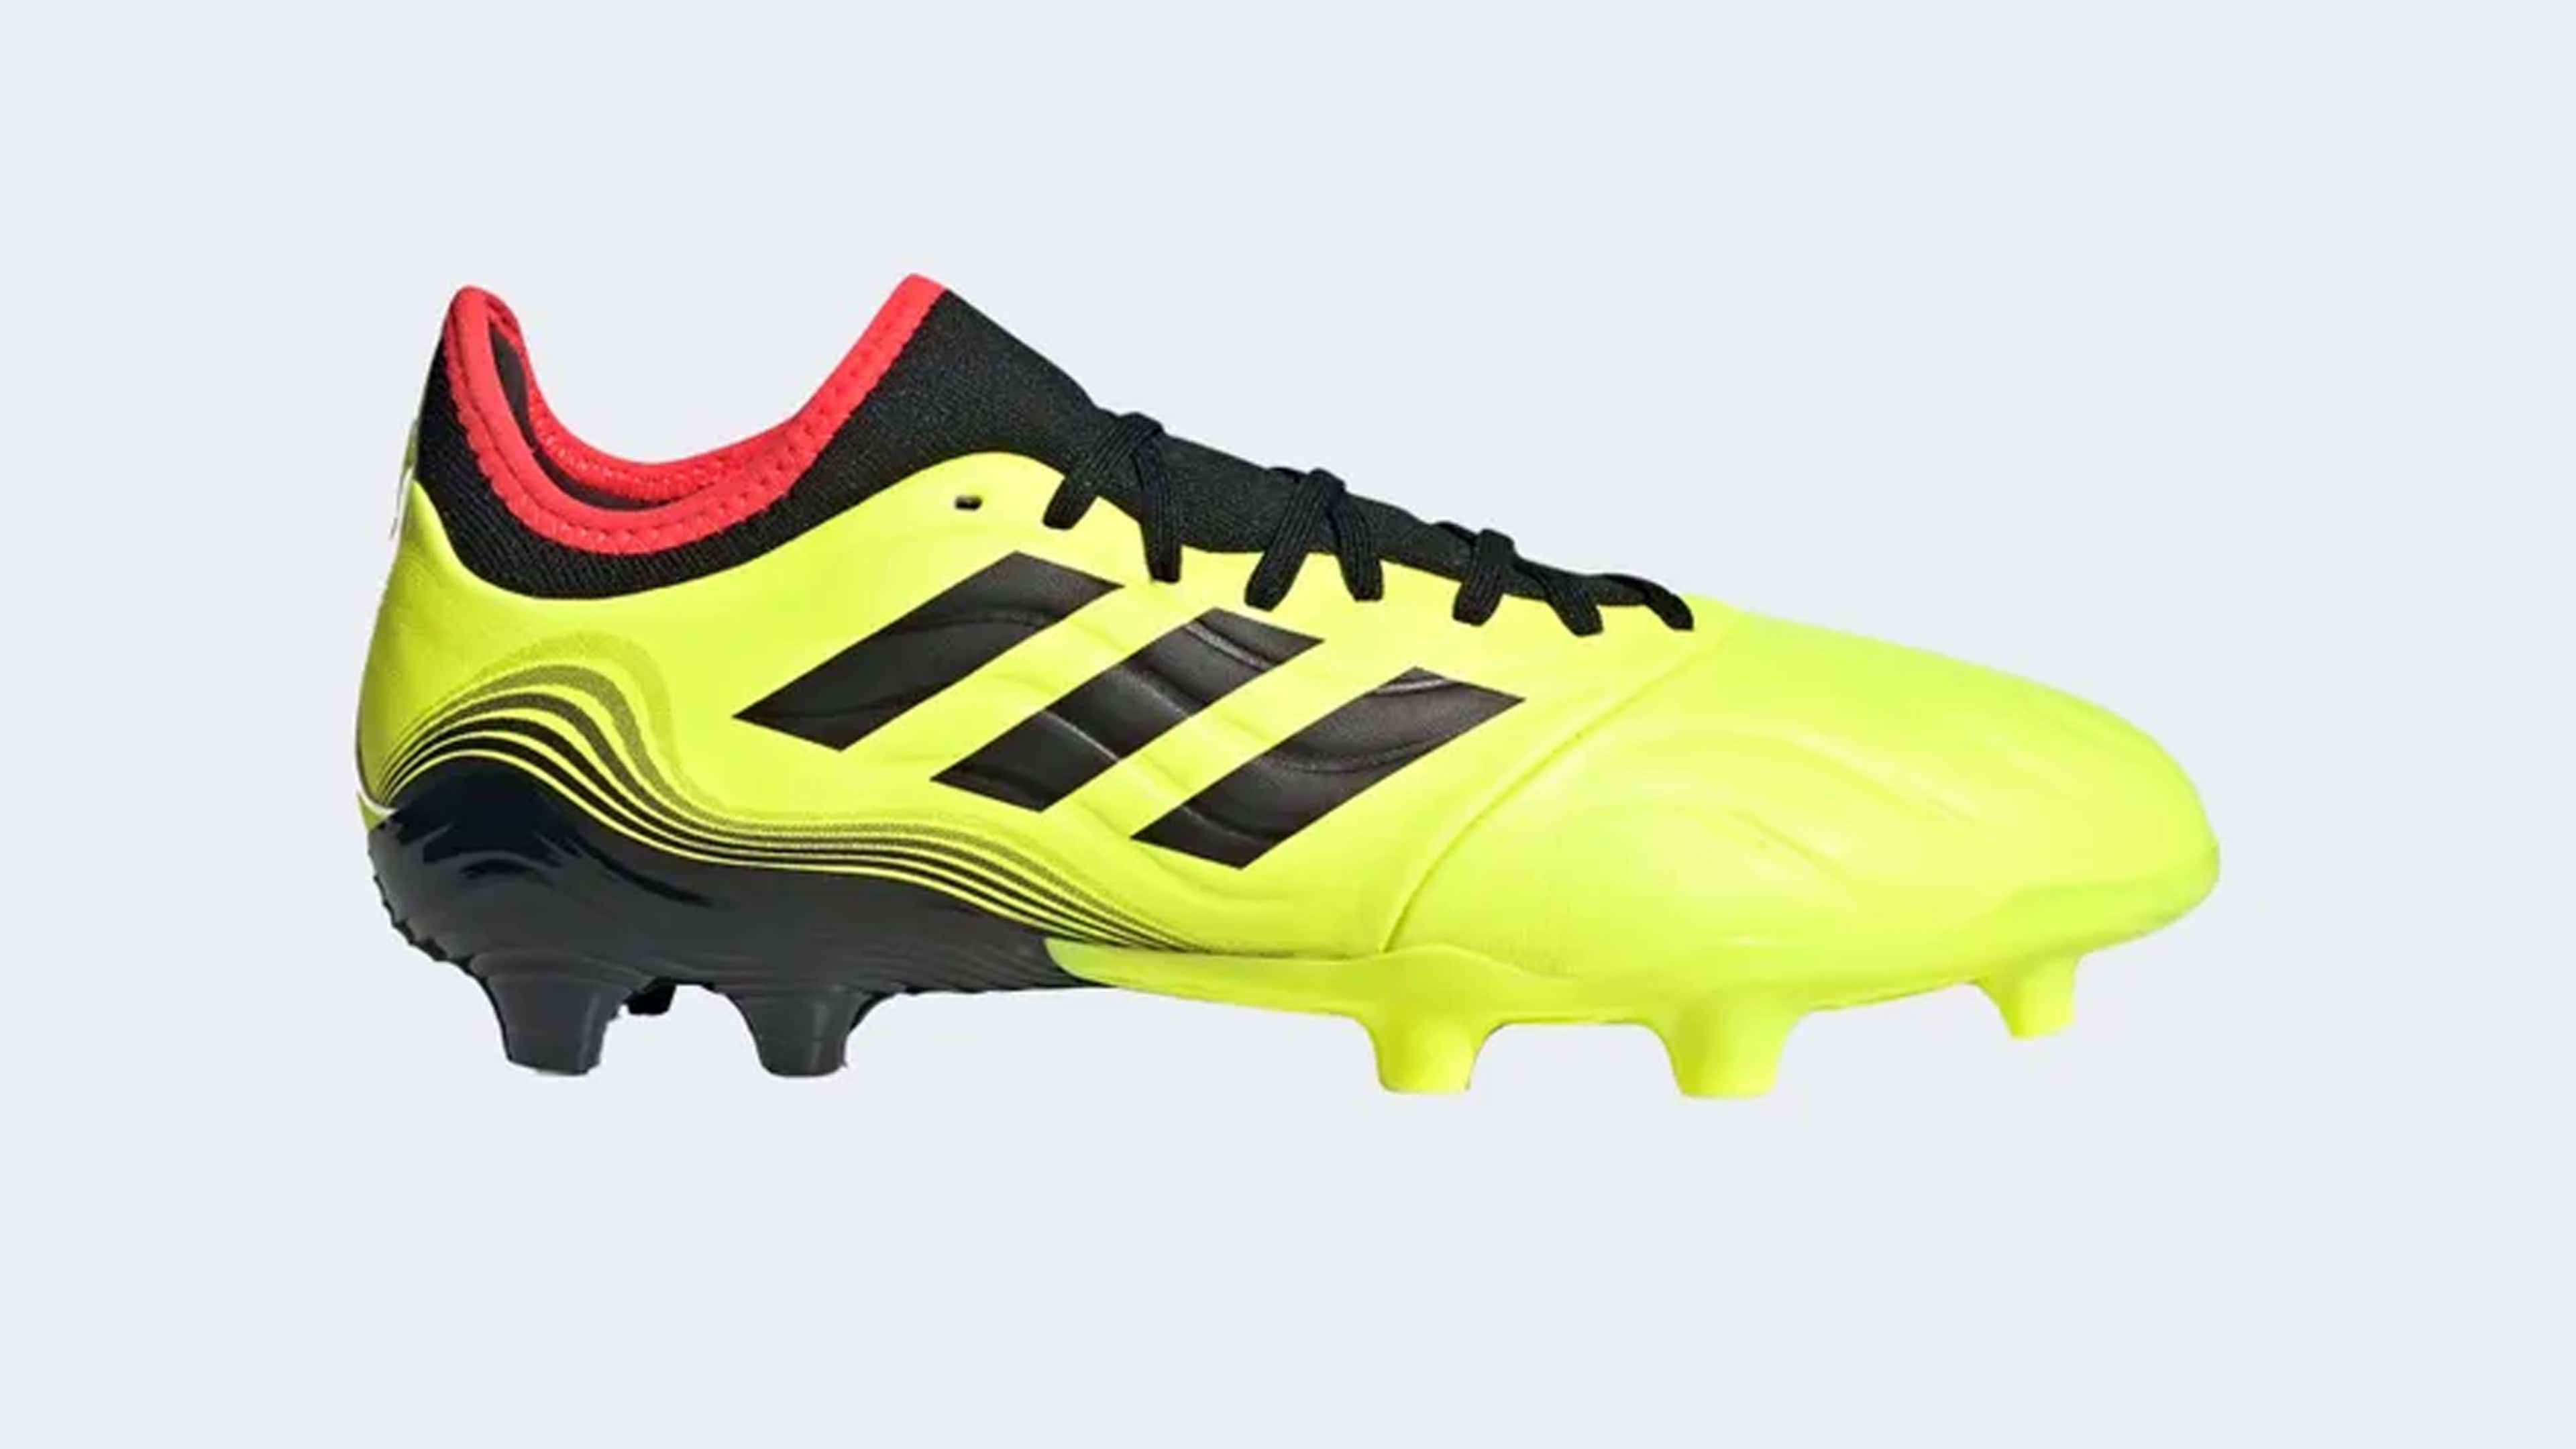 Verzadigen Artefact Eindig The best adidas football boots you can buy in 2023 | Goal.com US